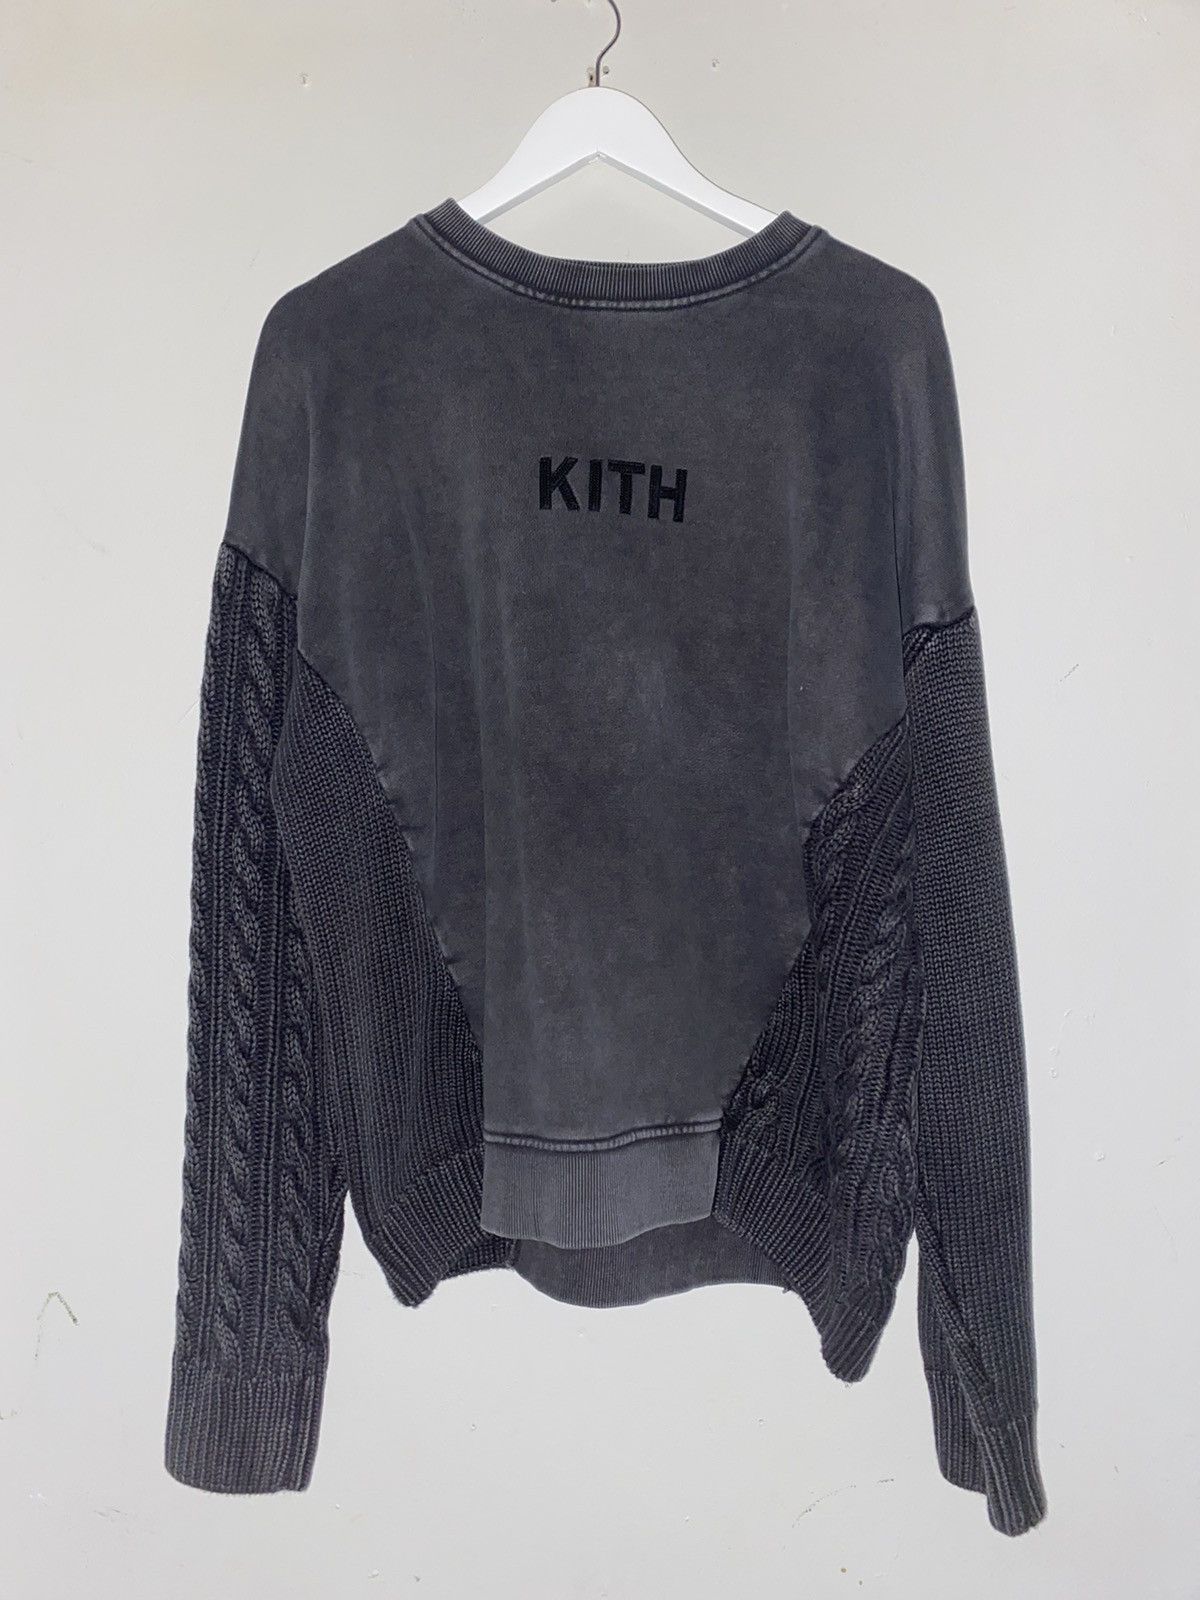 Kith KITH Combo Knit Crewneck | Grailed